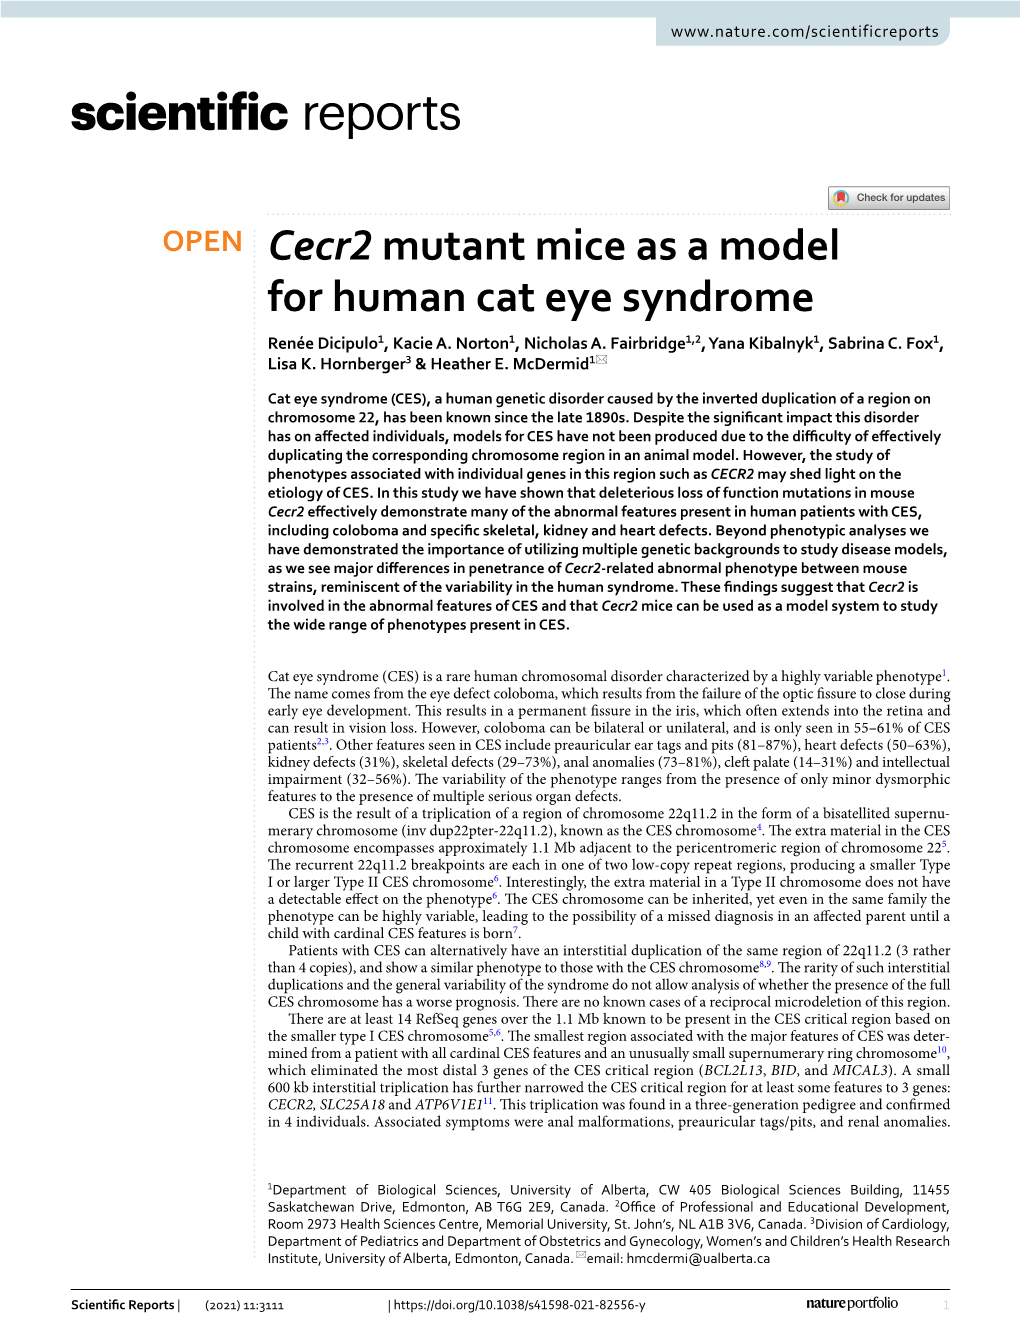 Cecr2 Mutant Mice As a Model for Human Cat Eye Syndrome Renée Dicipulo1, Kacie A